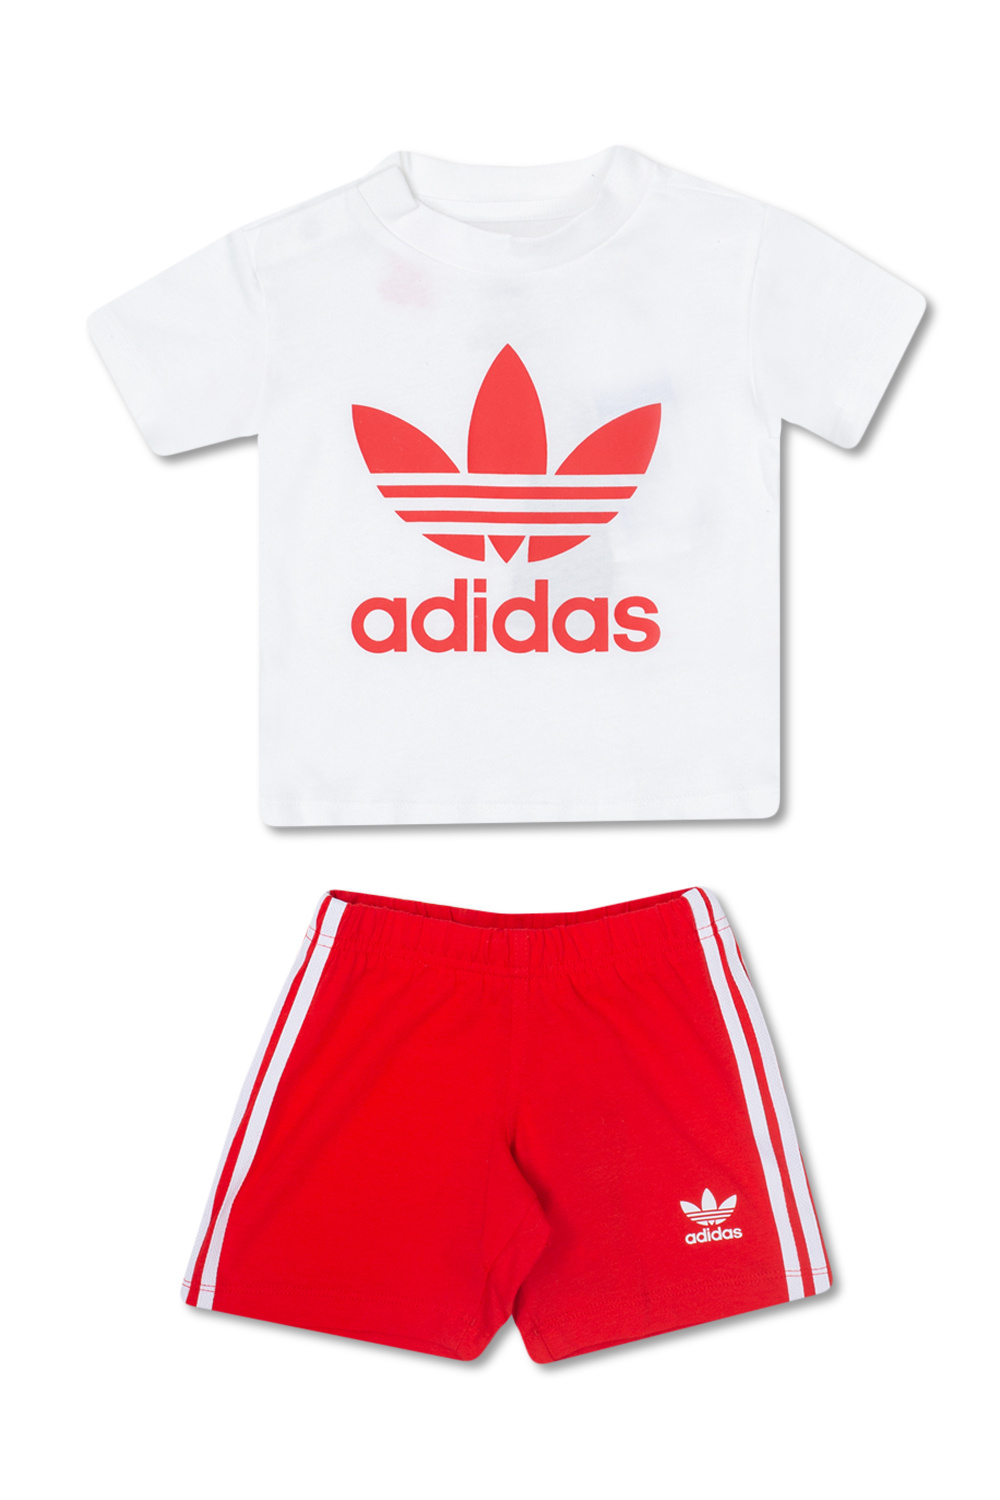 adidas samba with shorts